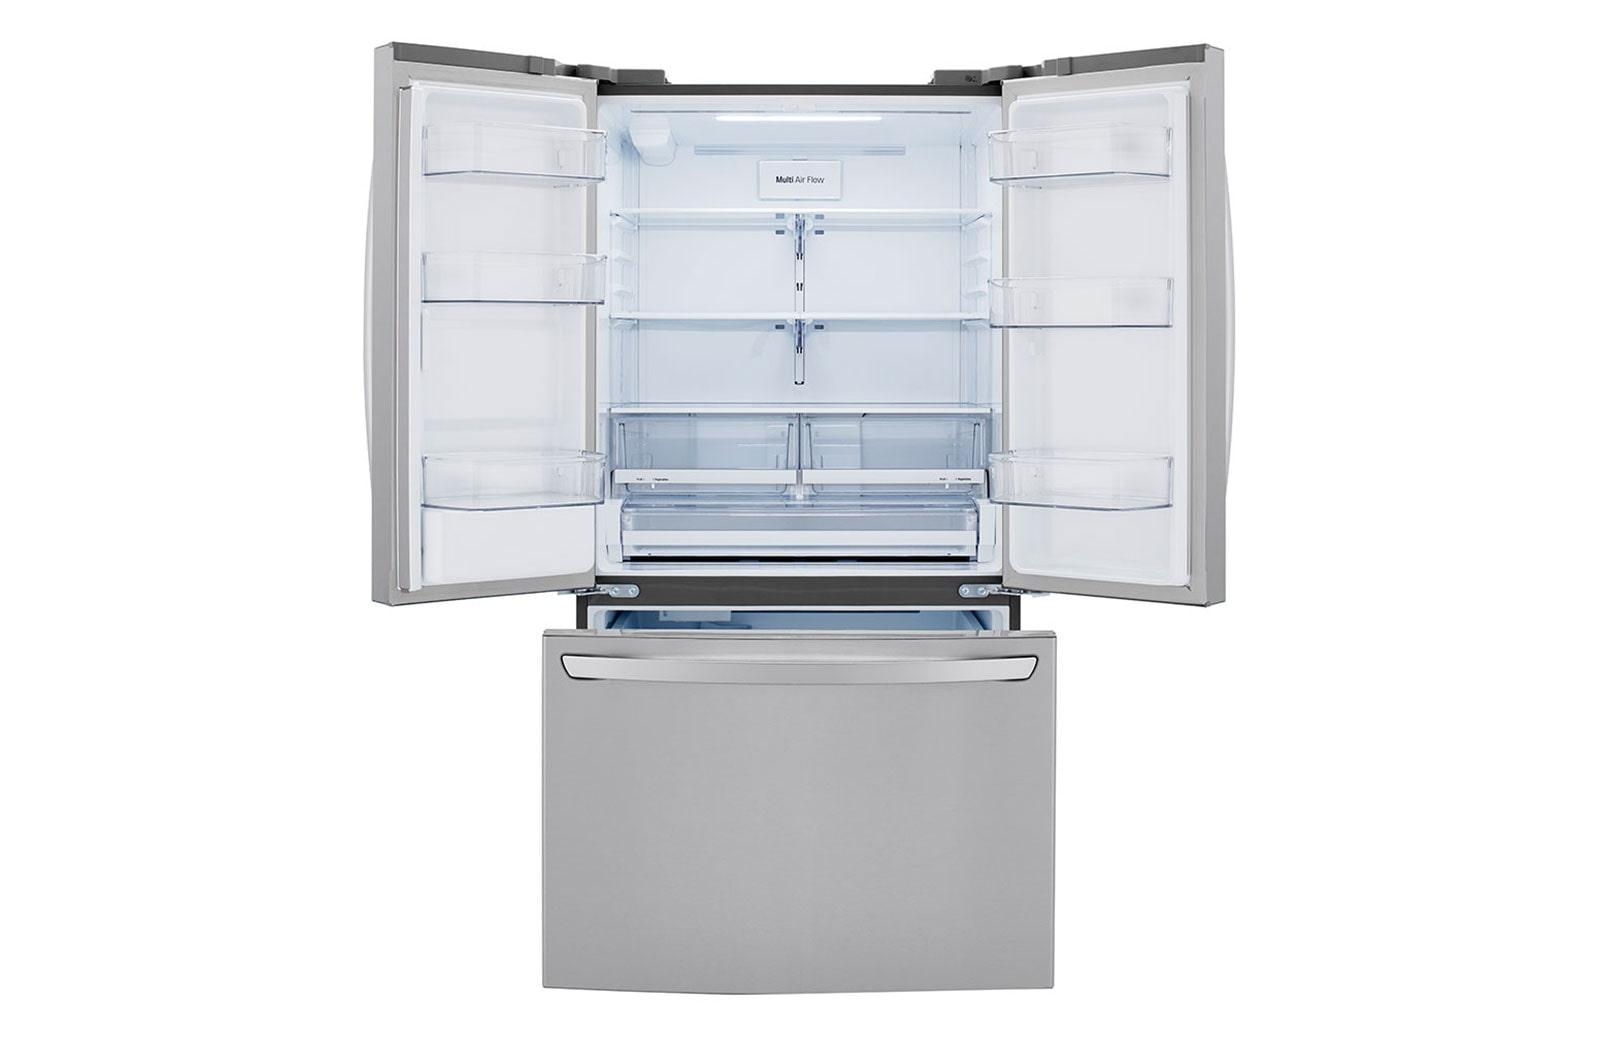 Lg 29 cu ft. French Door Refrigerator with Slim Design Water Dispenser